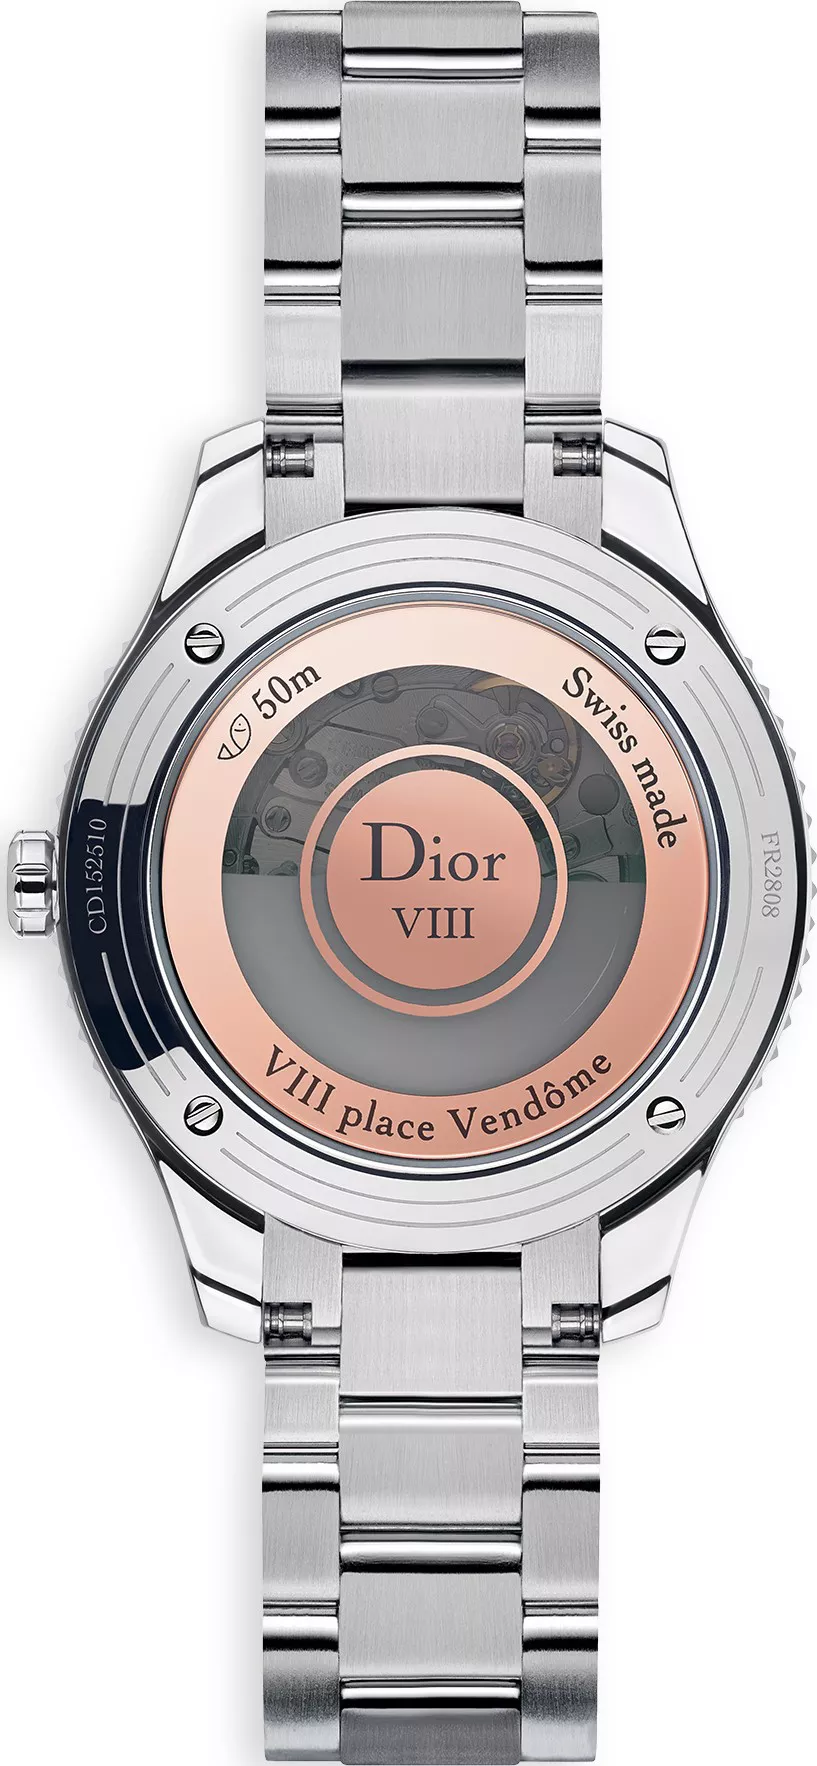 Christian Dior Dior VIII CD152510M002 Diamonds Watch 32